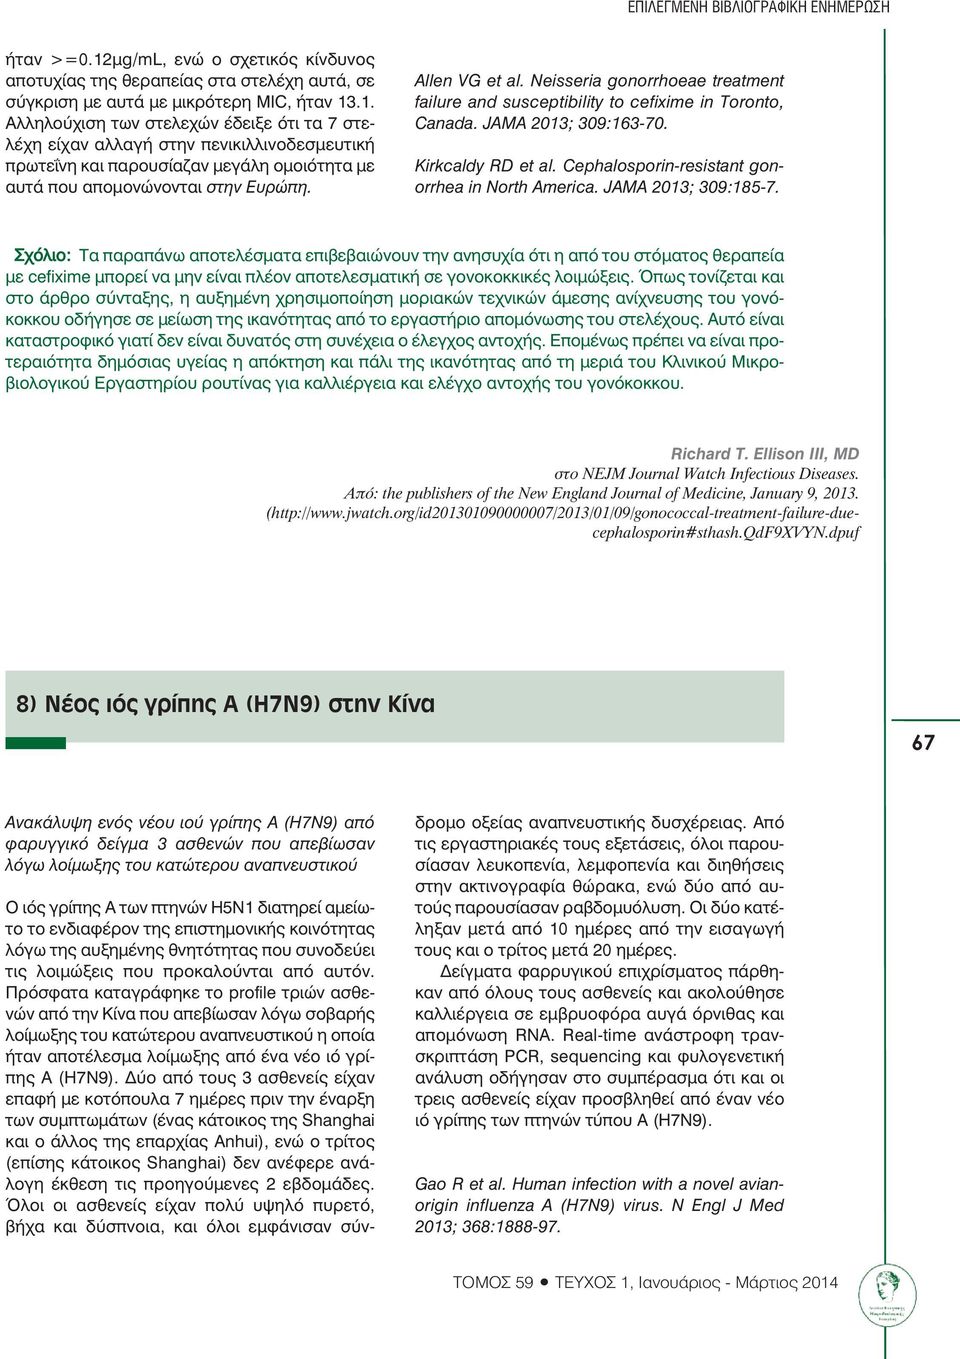 Cephalosporin-resistant gonorrhea in North America. JAMA 2013; 309:185-7.